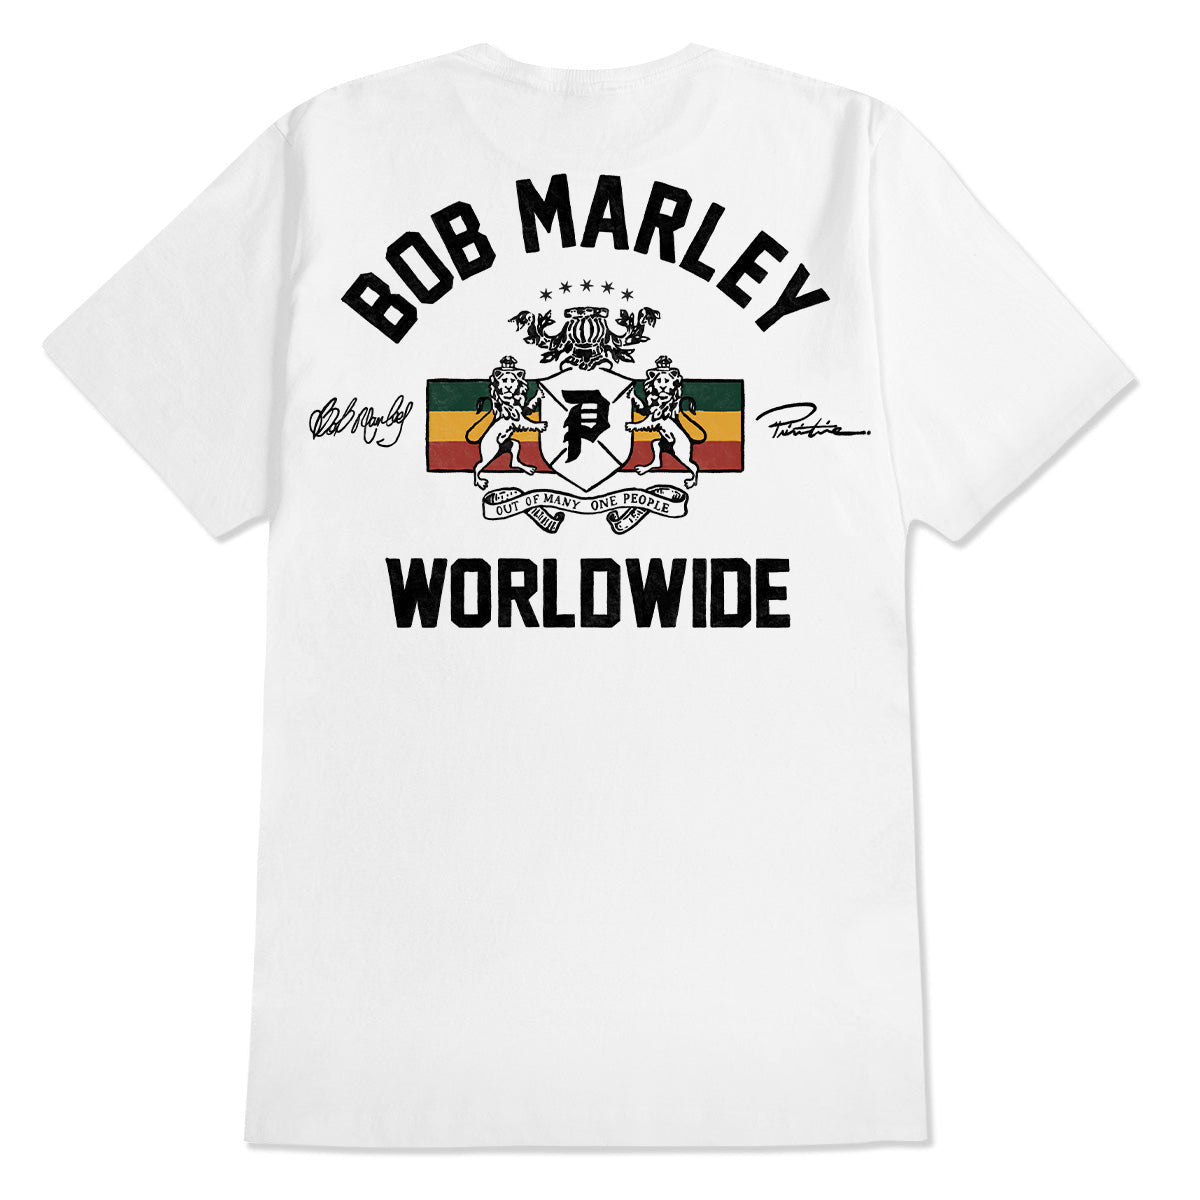 Primitive x Bob Marley Heritage T-Shirt - White image 1